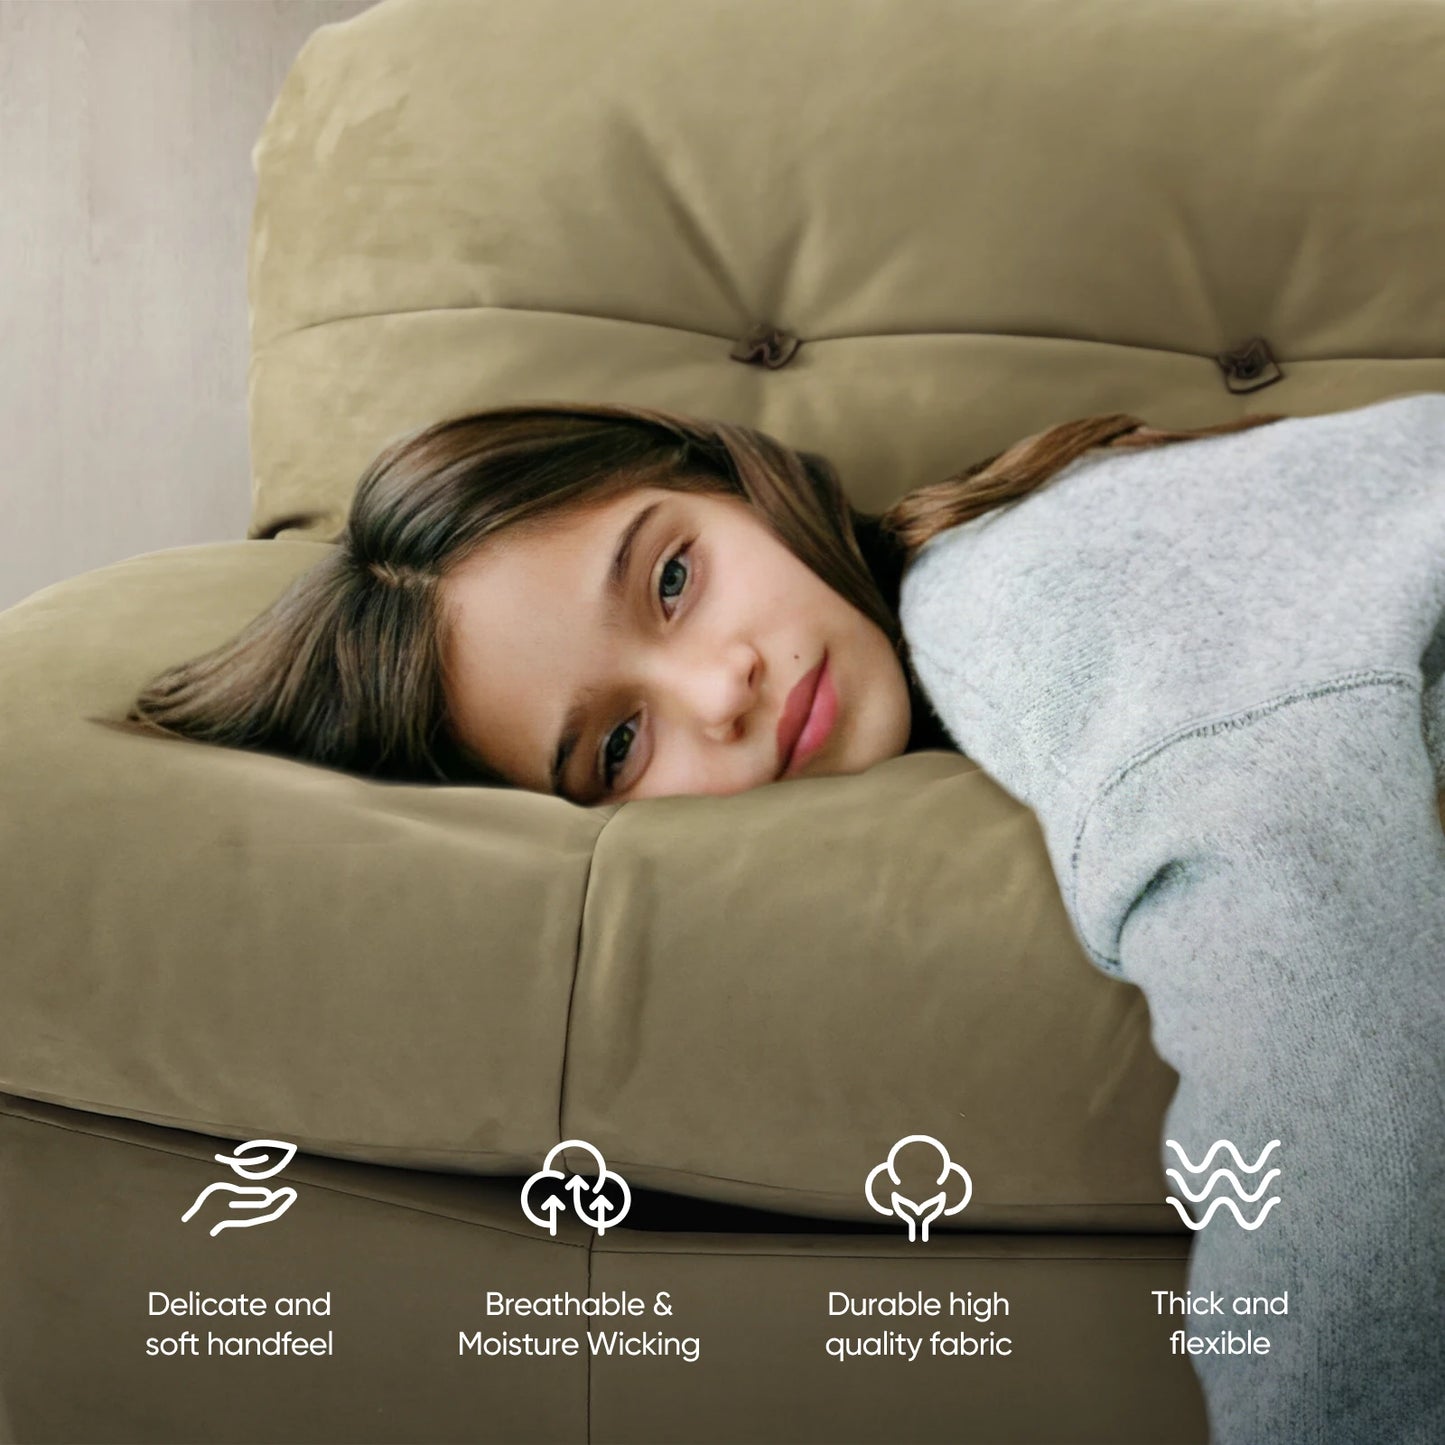 CORX Designs - Malino Cloud Sofa Sleeper Modular Couch - Review